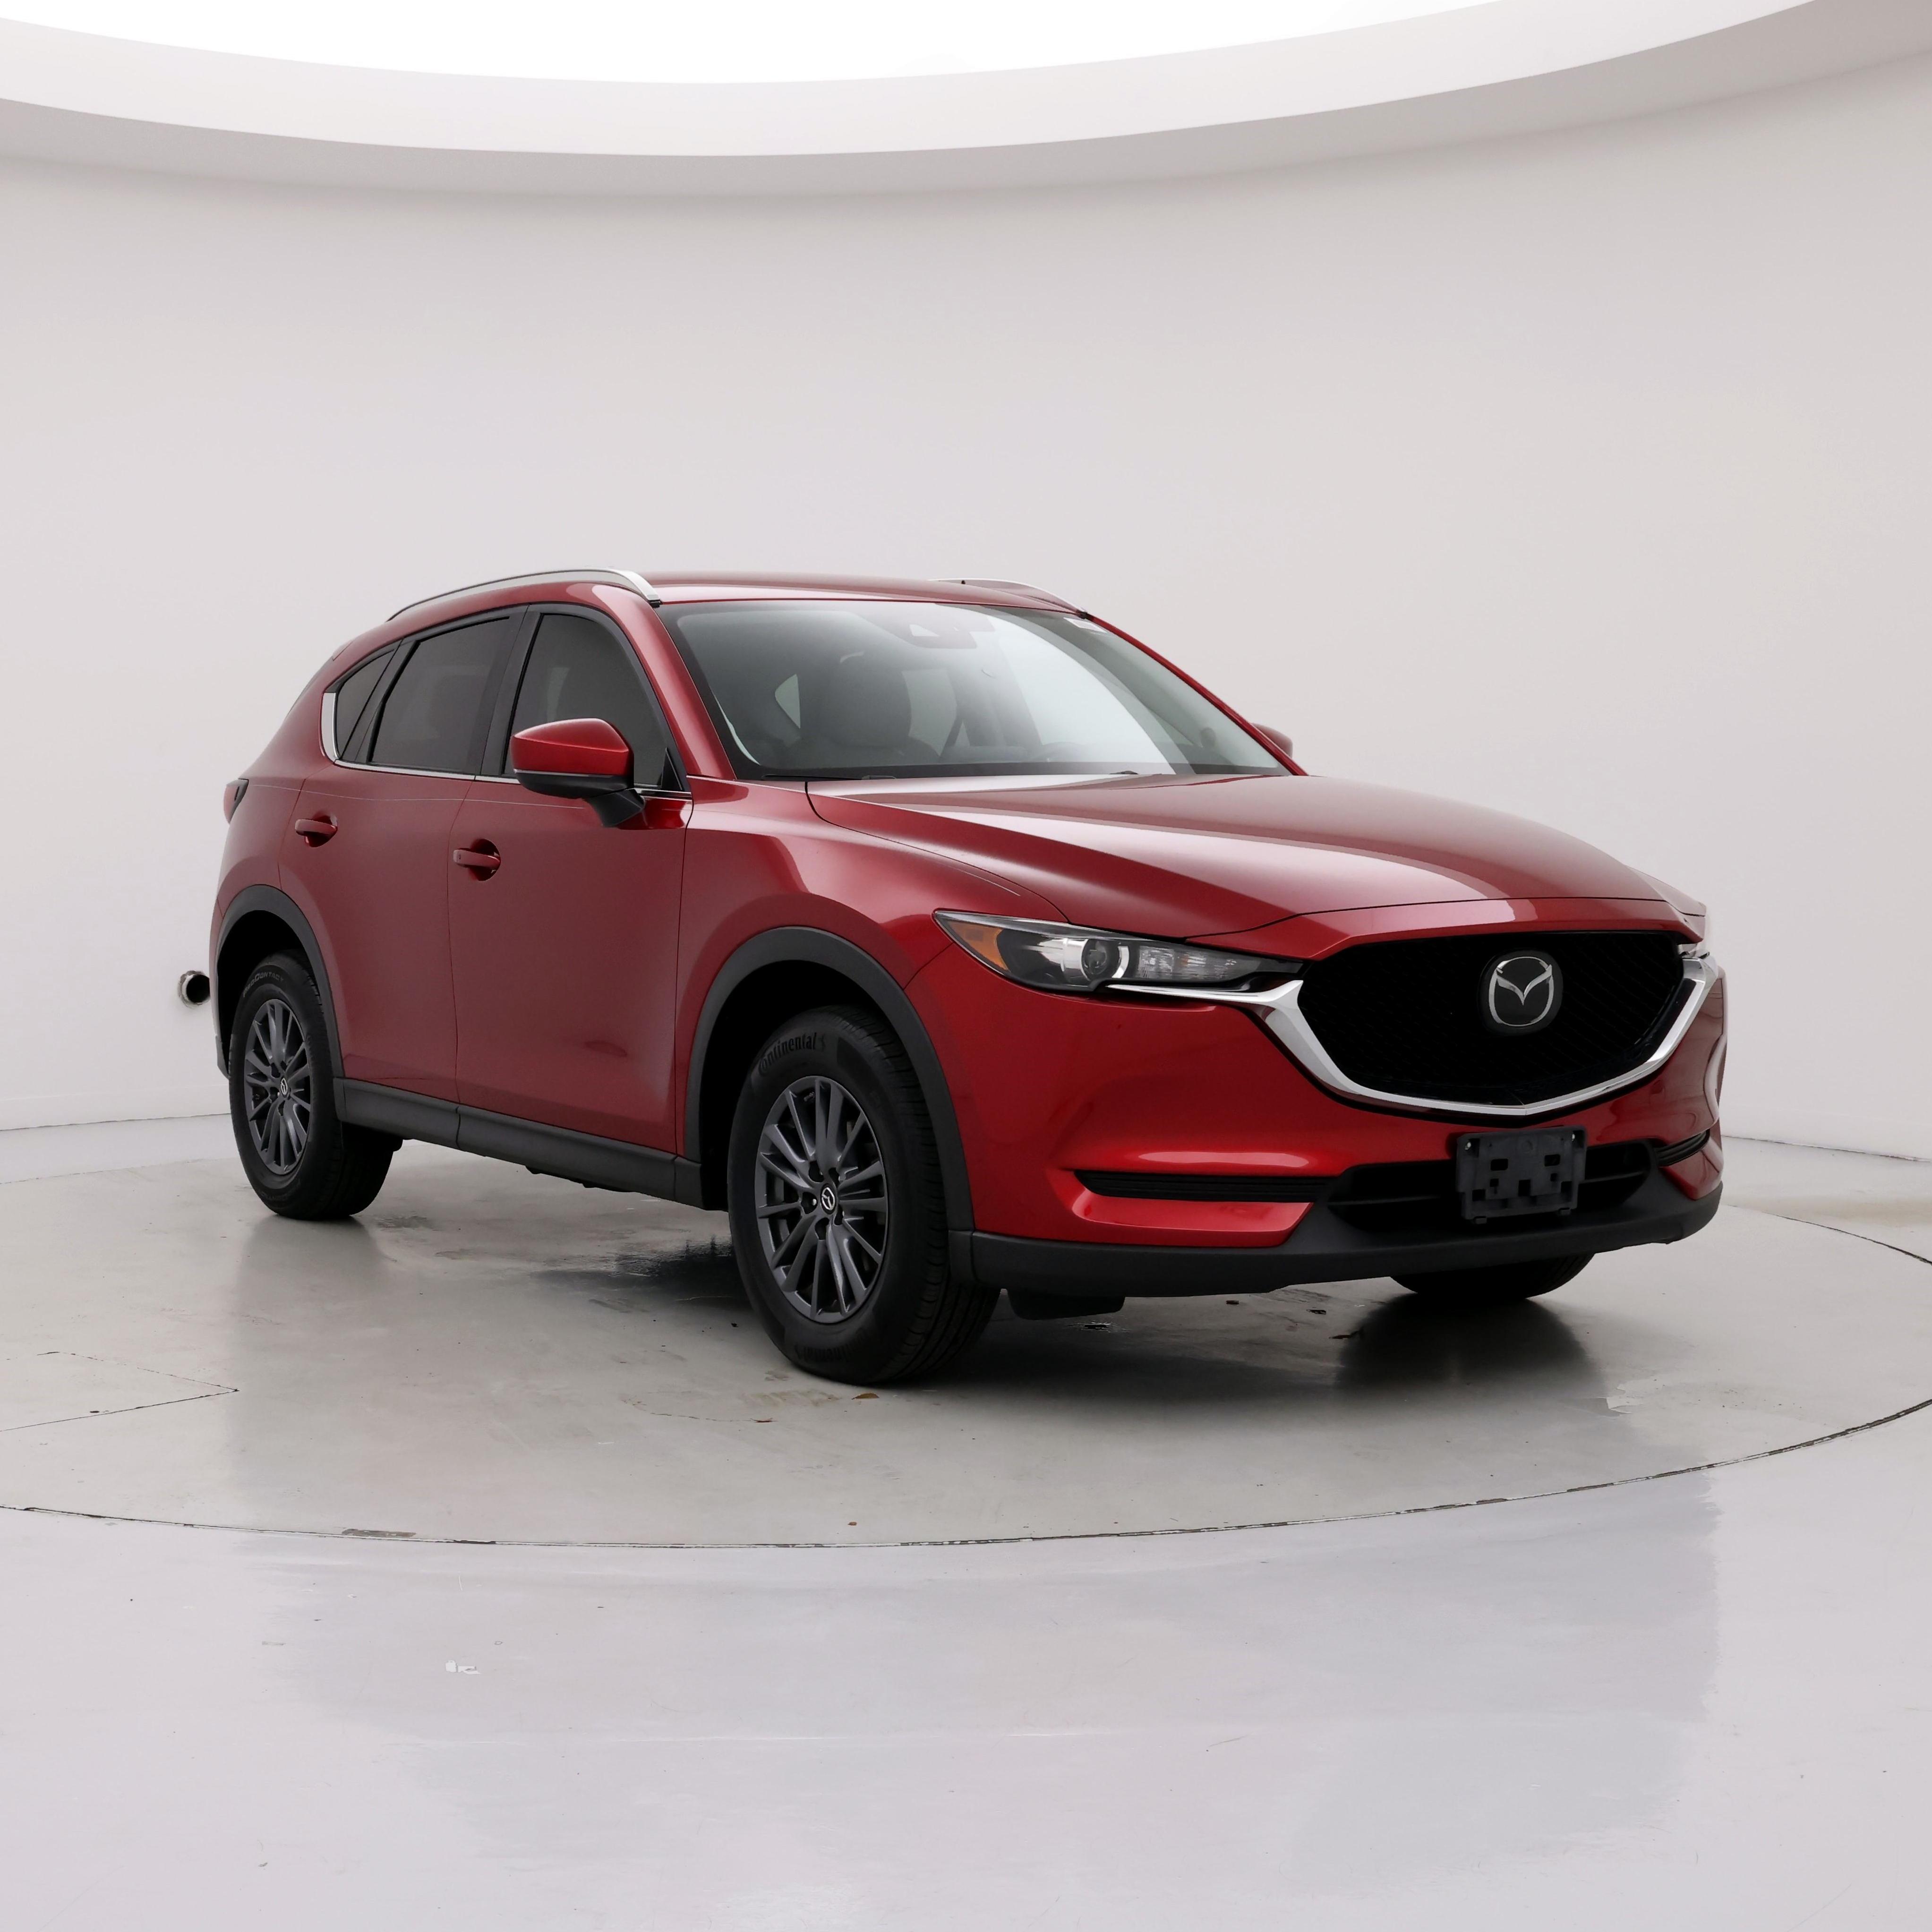 2019 Mazda CX-5 Touring FWD